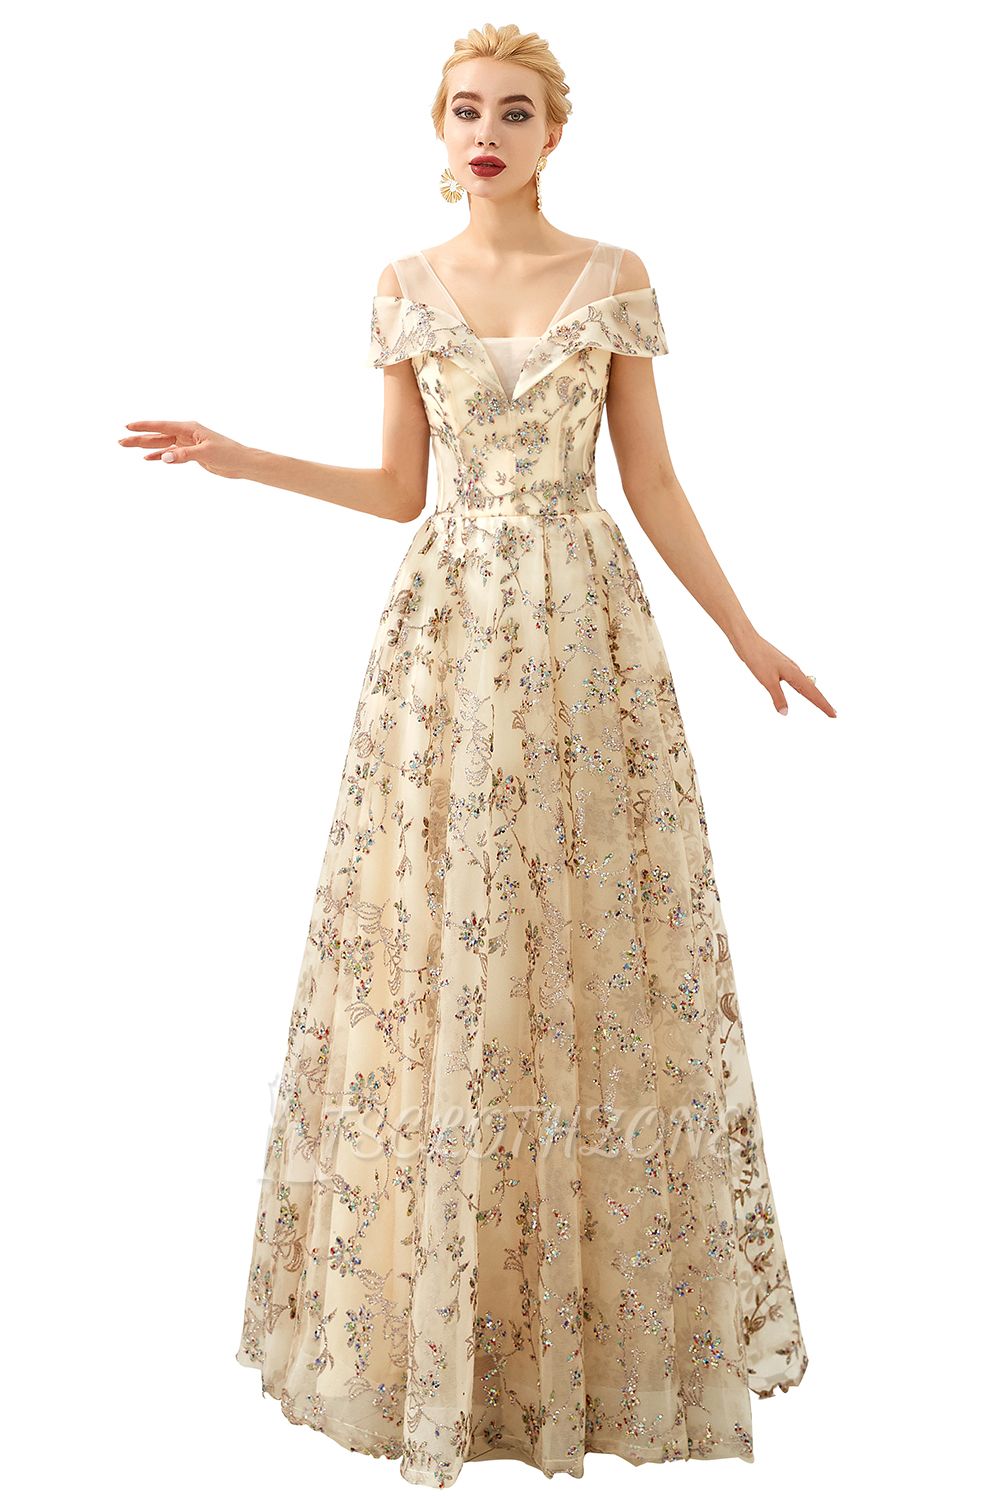 Herbert | Elegant Gold Cold shoulder Prom Dress with Delicate Multi-color Lace Appliques